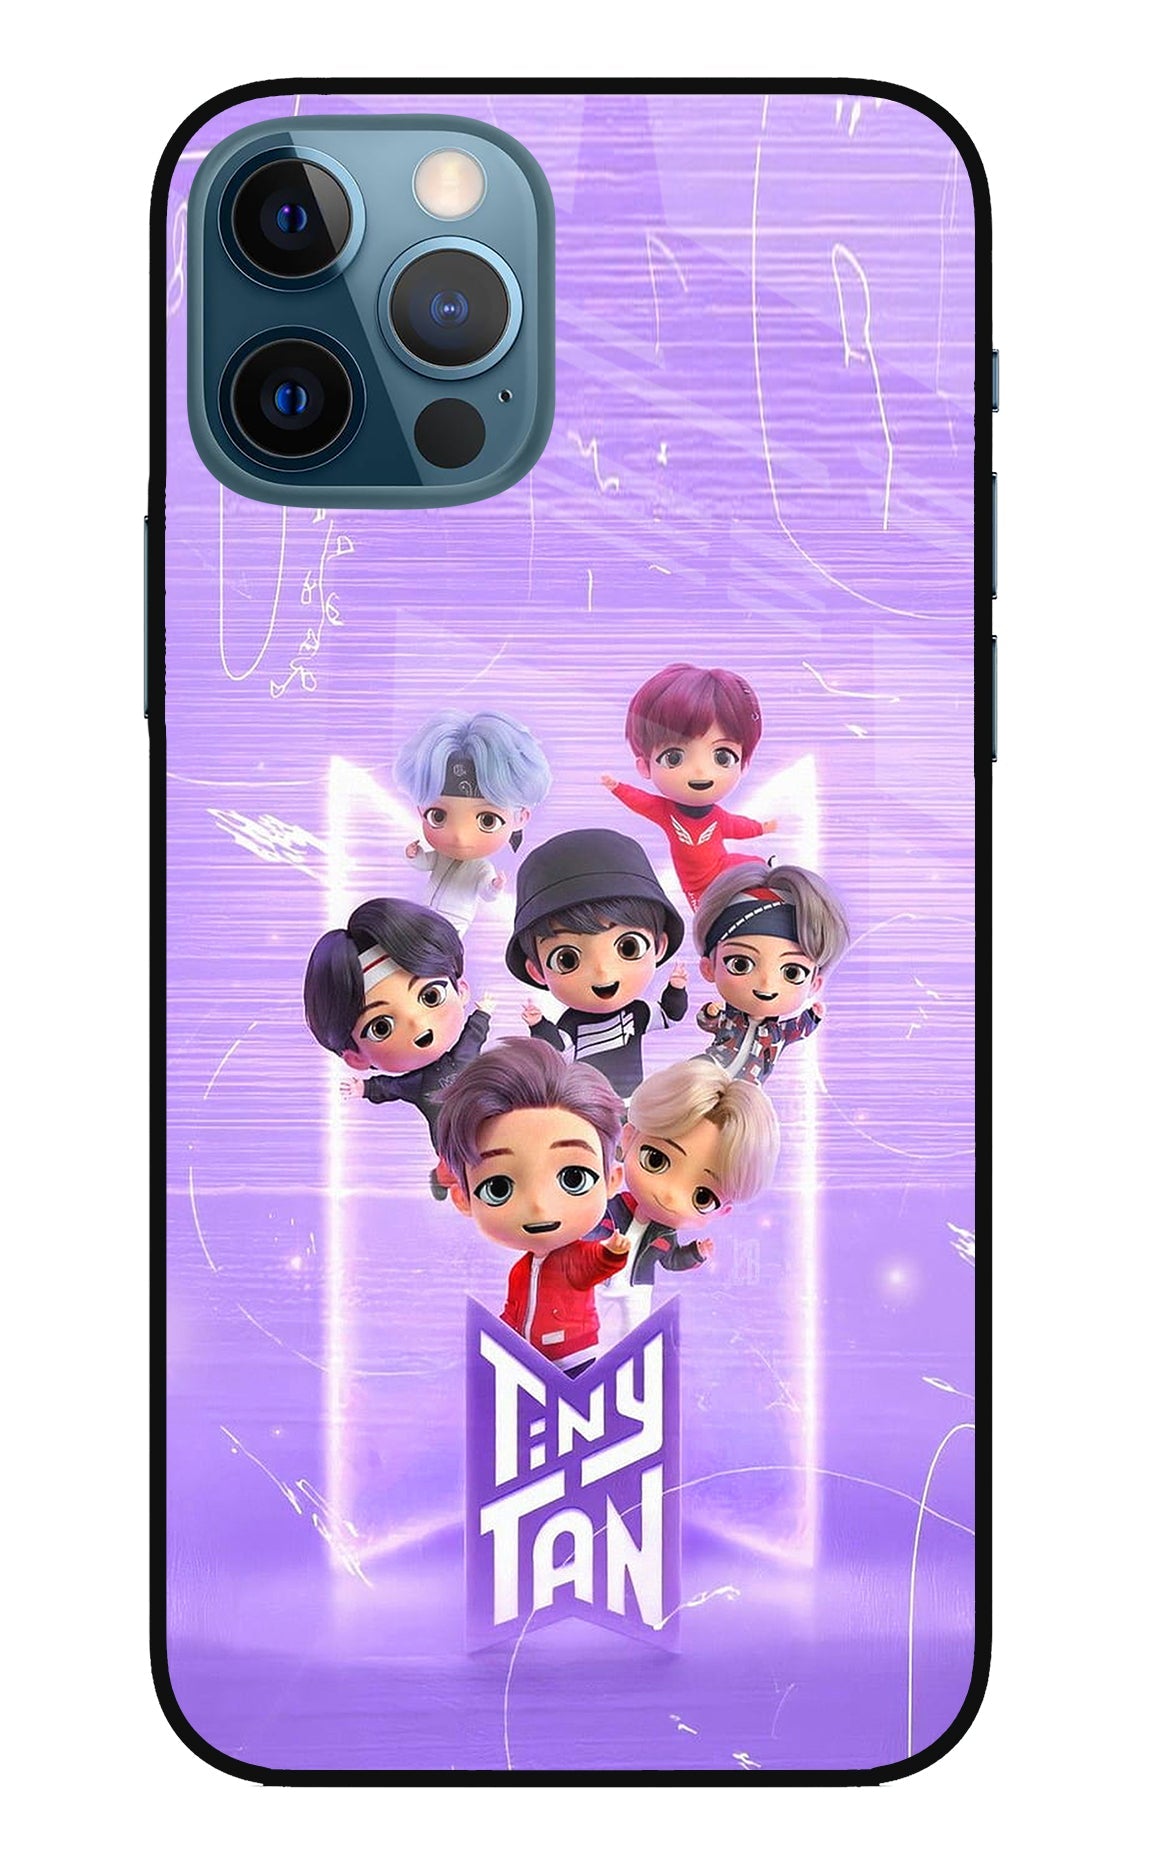 BTS Tiny Tan iPhone 12 Pro Glass Case